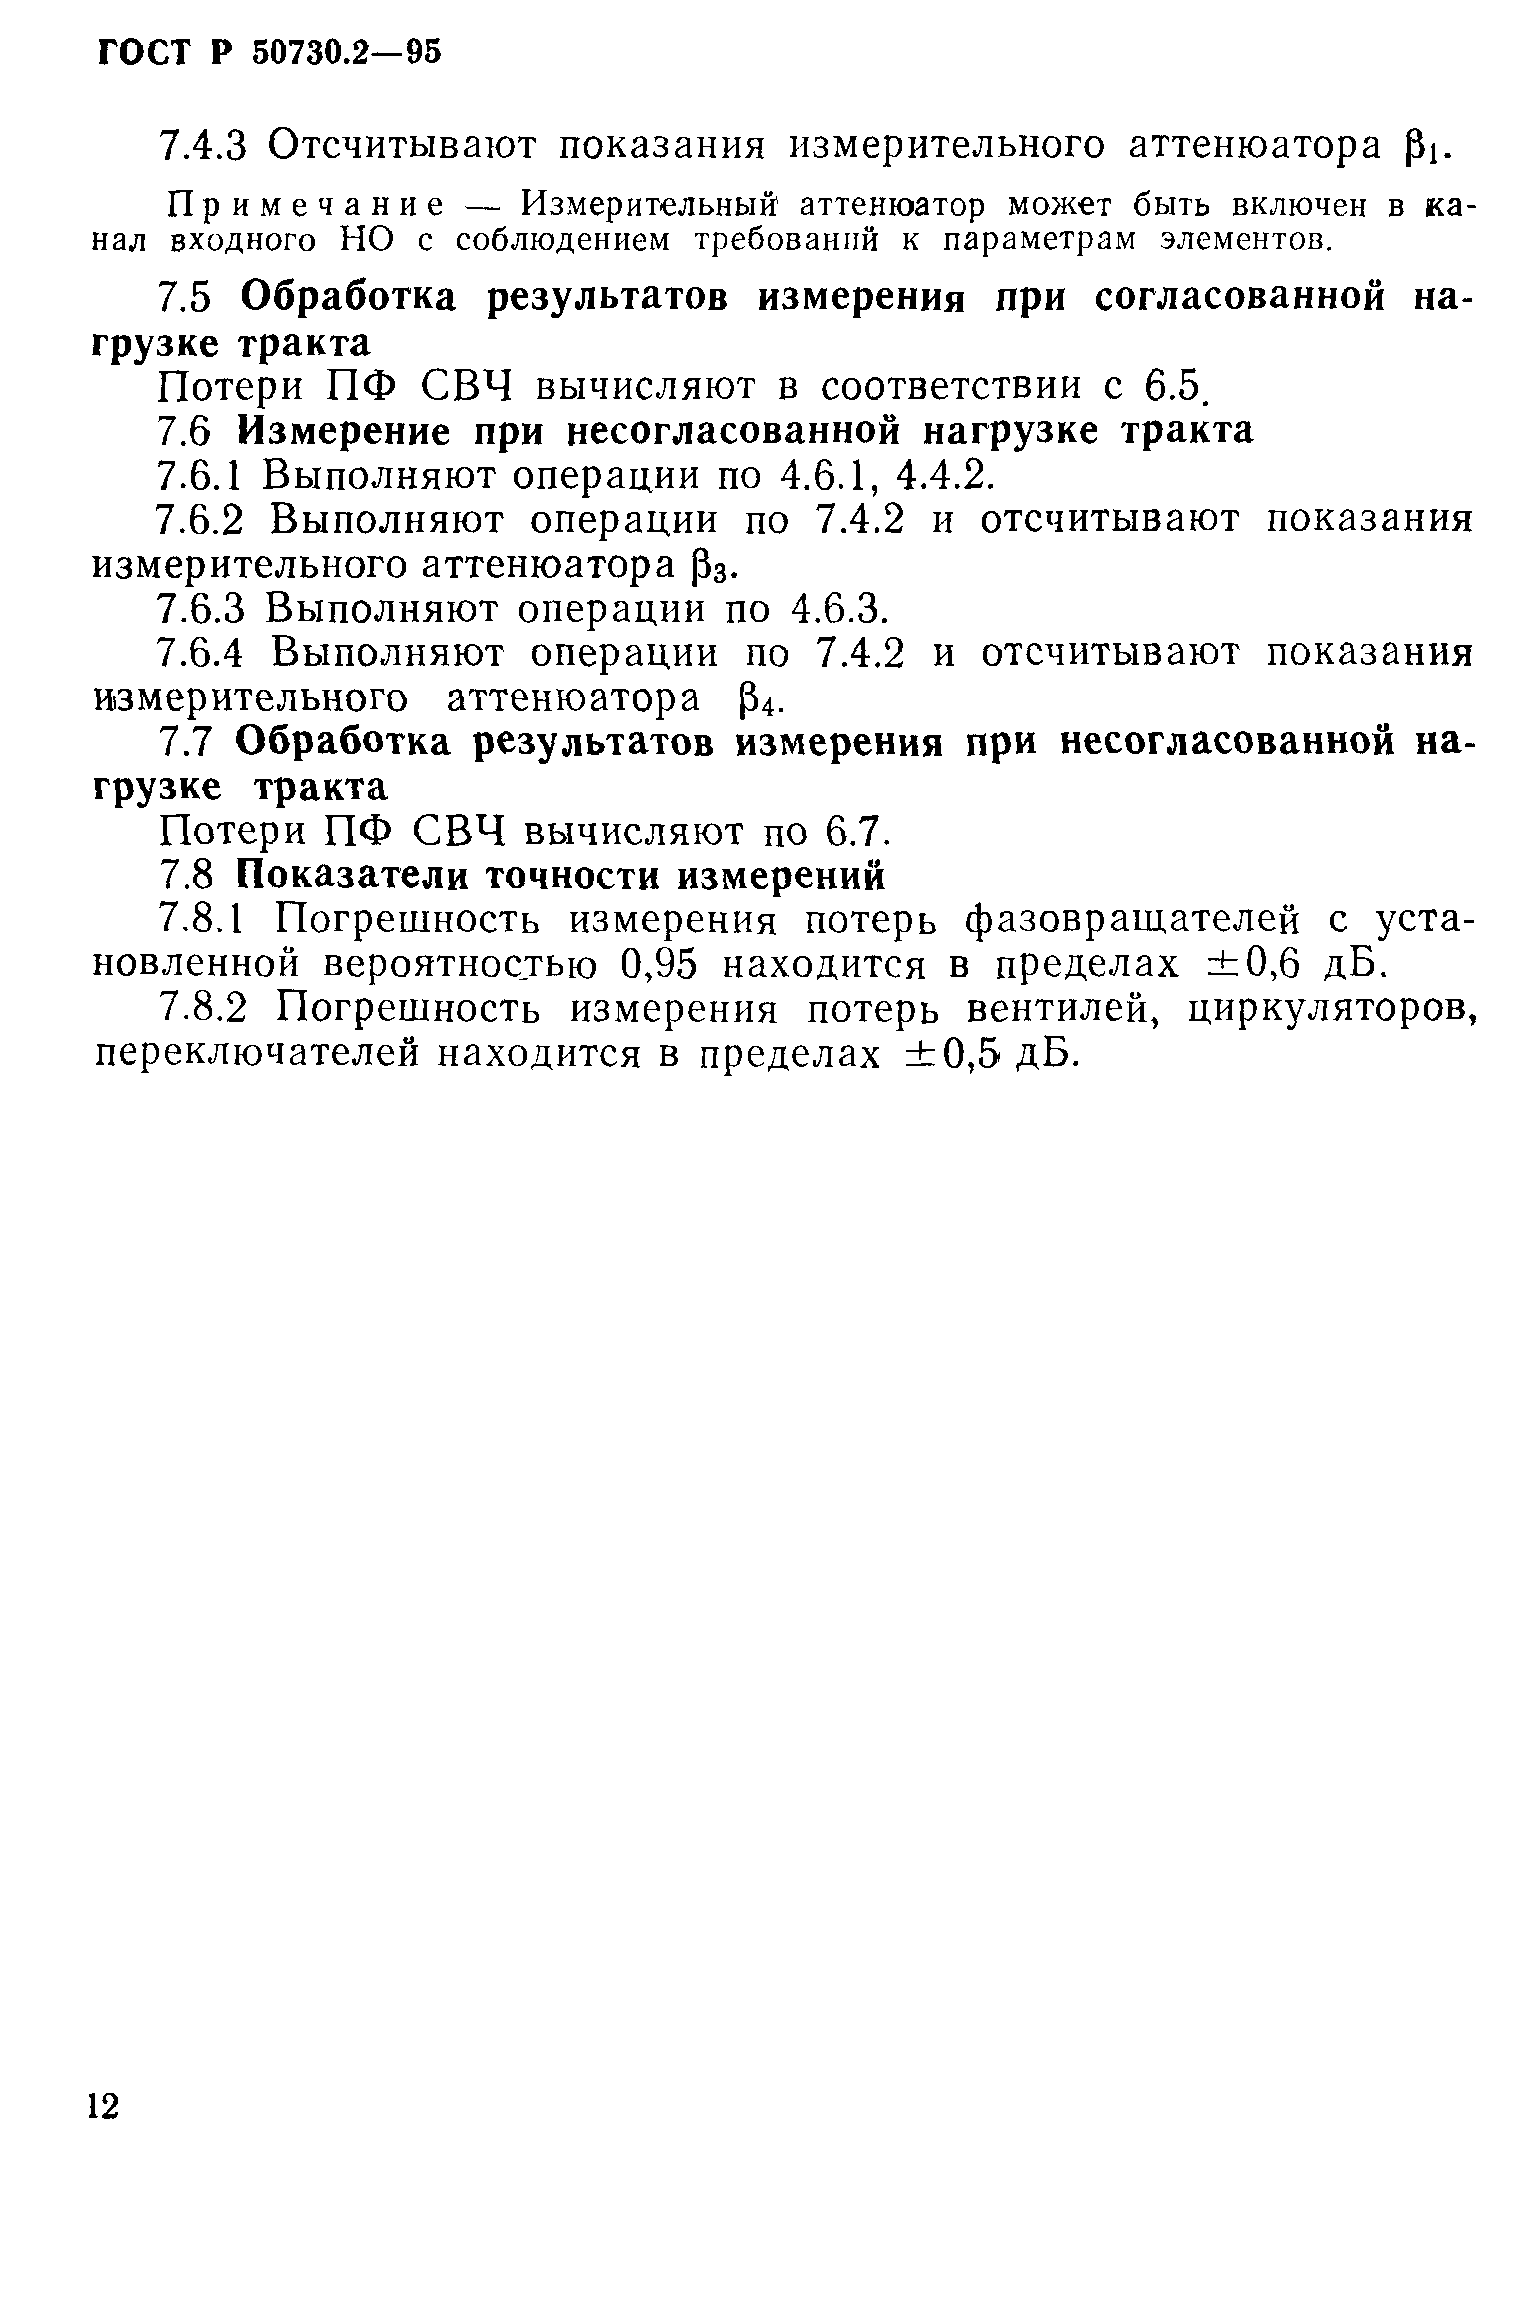 ГОСТ Р 50730.2-95